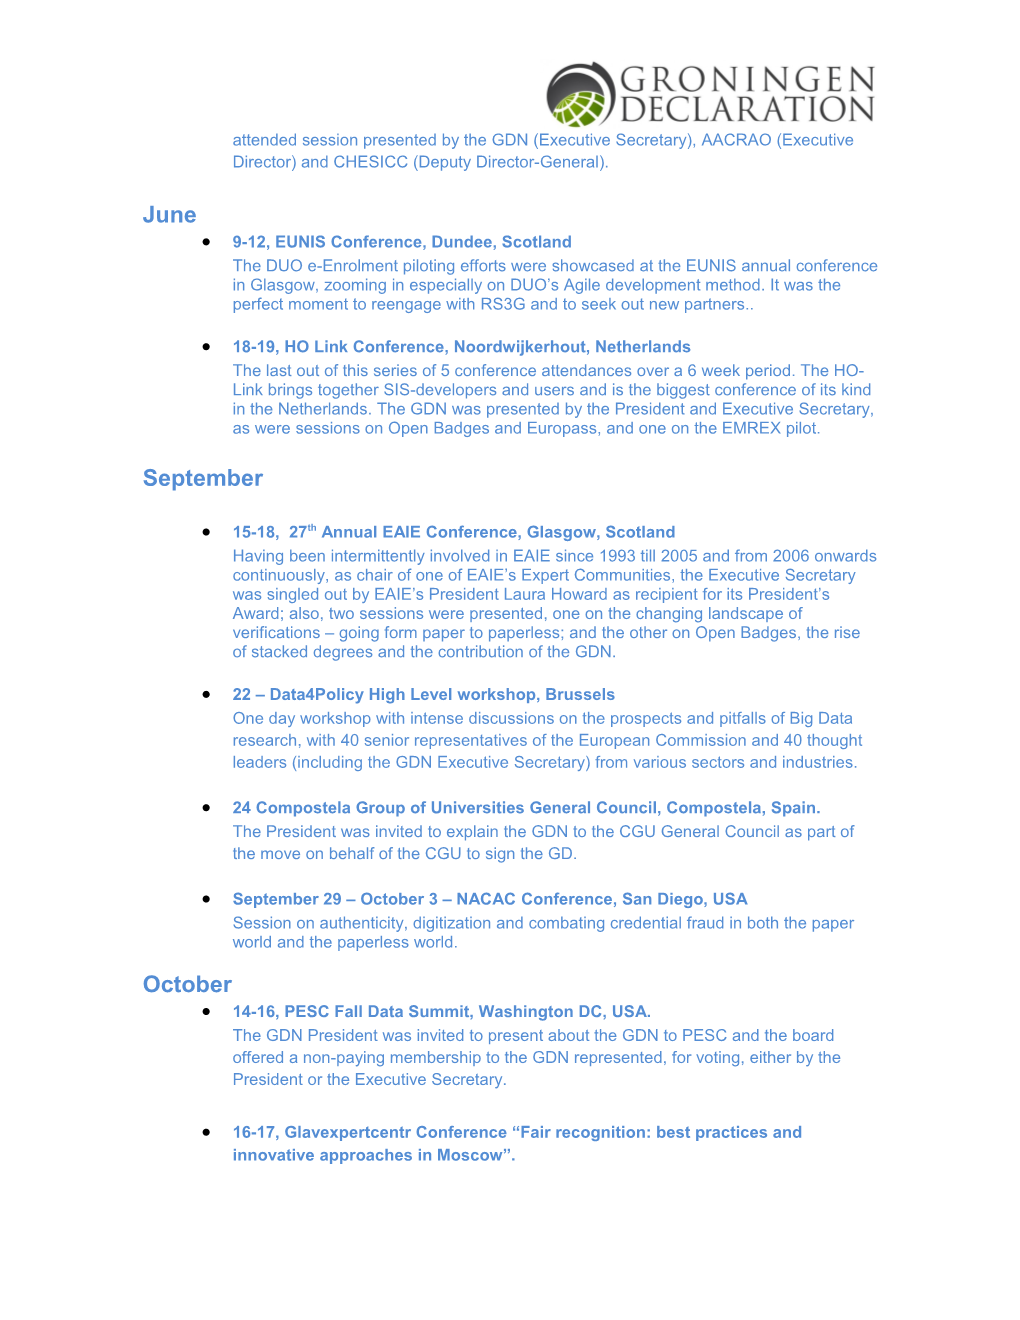 Statutes for the Groningen Declaration Network